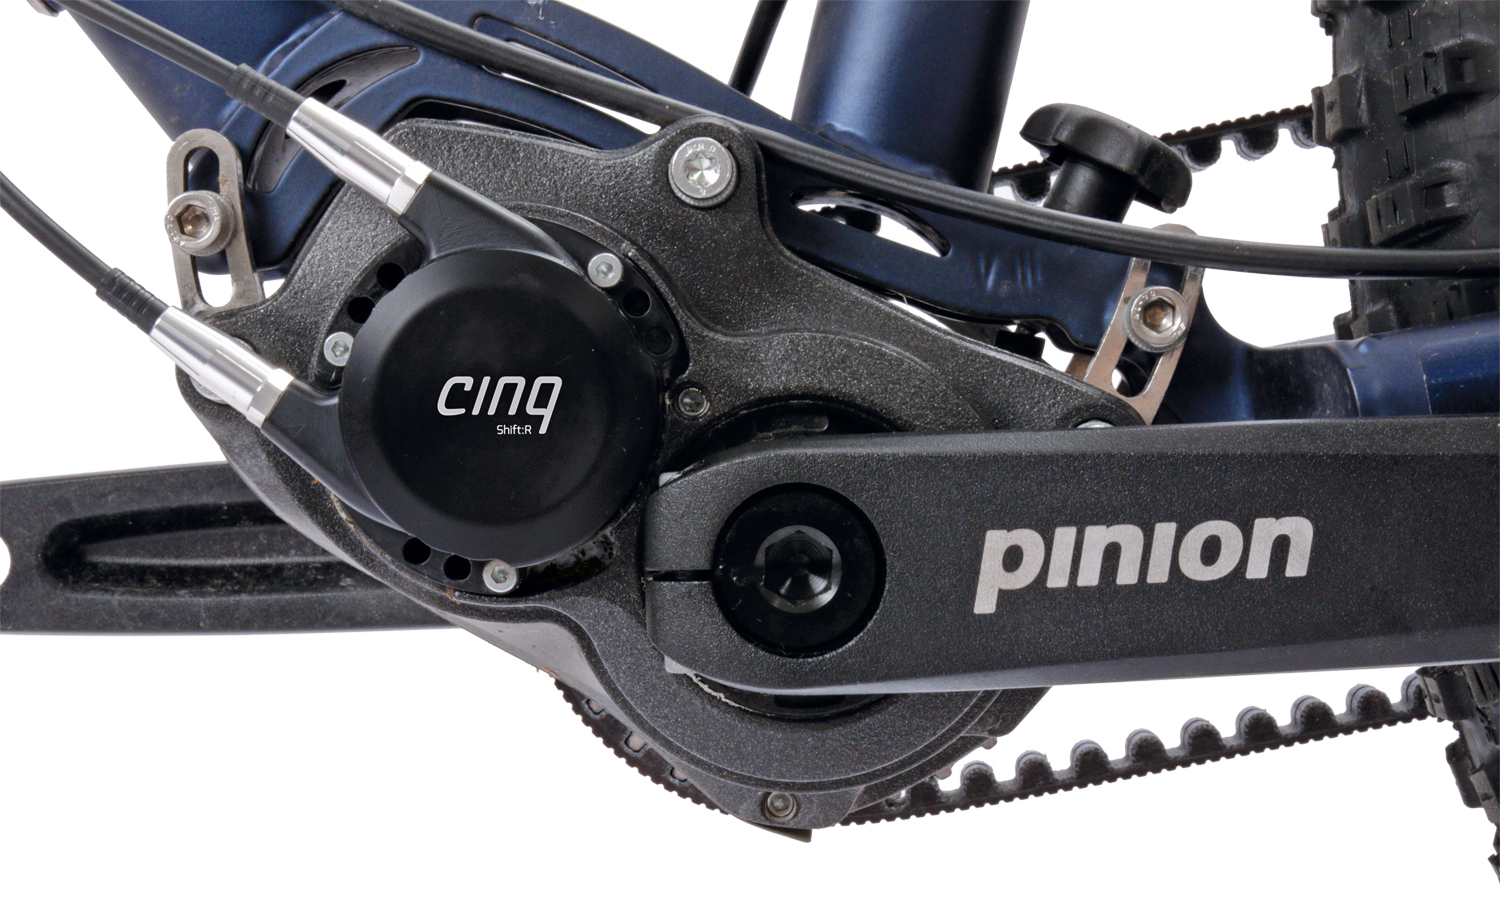 Tout Terrain Cinq-Shift:R, Pinion gearbox powered touring commuter gravel road bikes